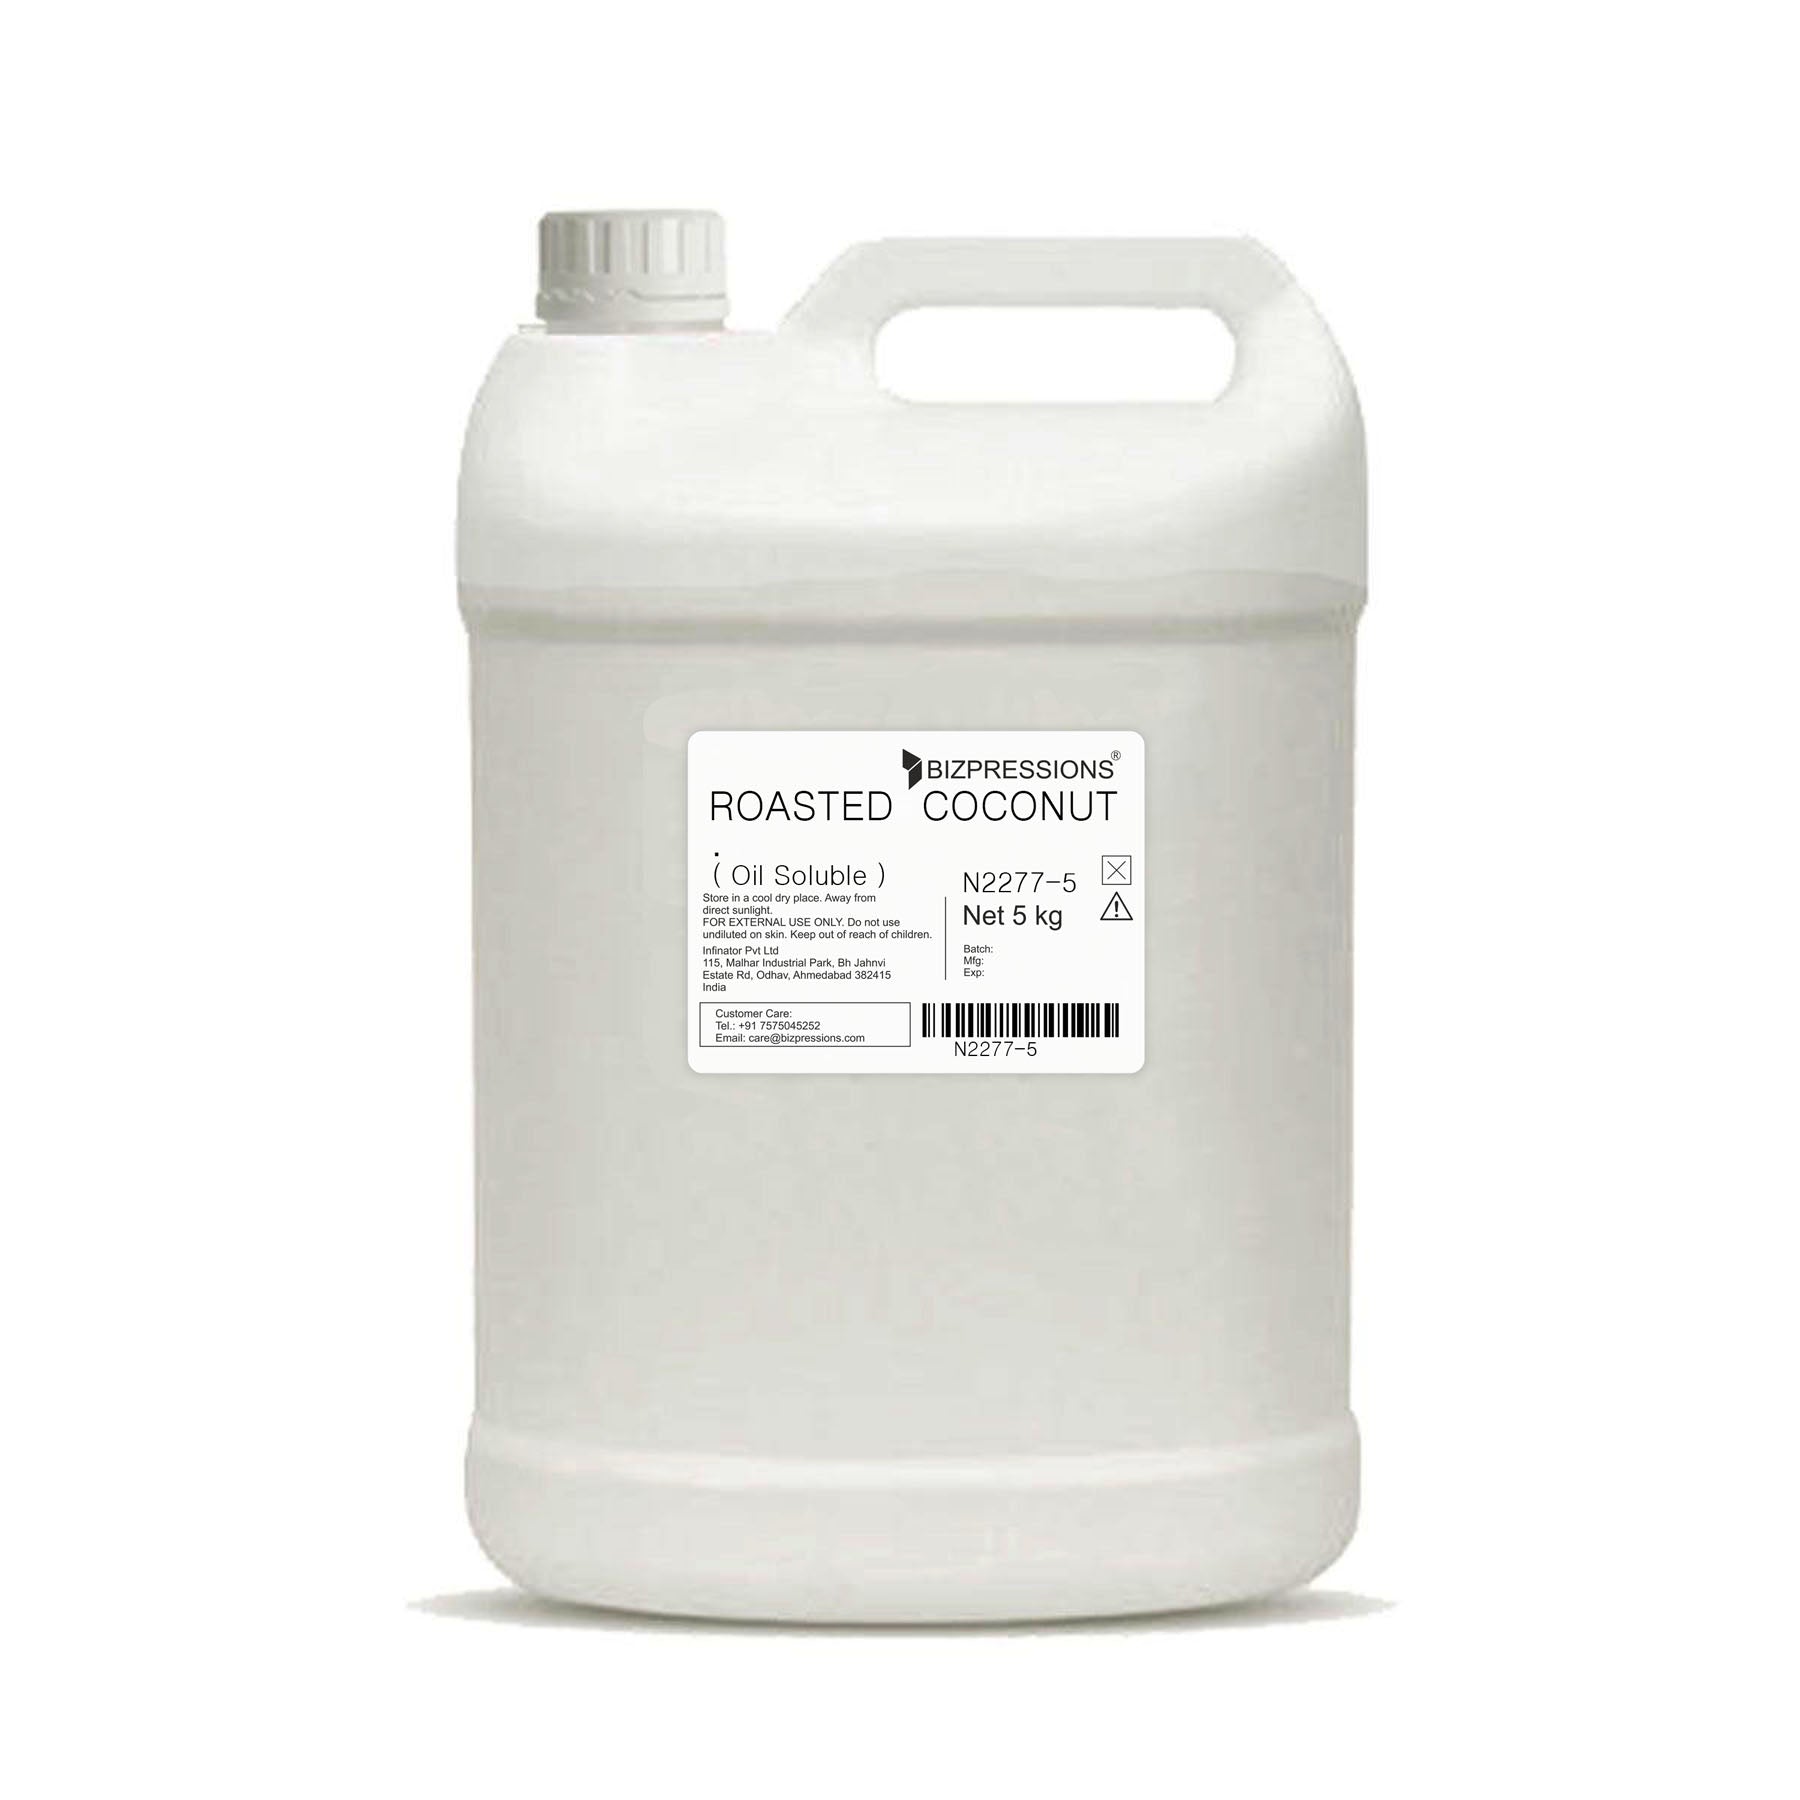 ROASTED COCONUT - Fragrance ( Oil Soluble ) - 5 kg